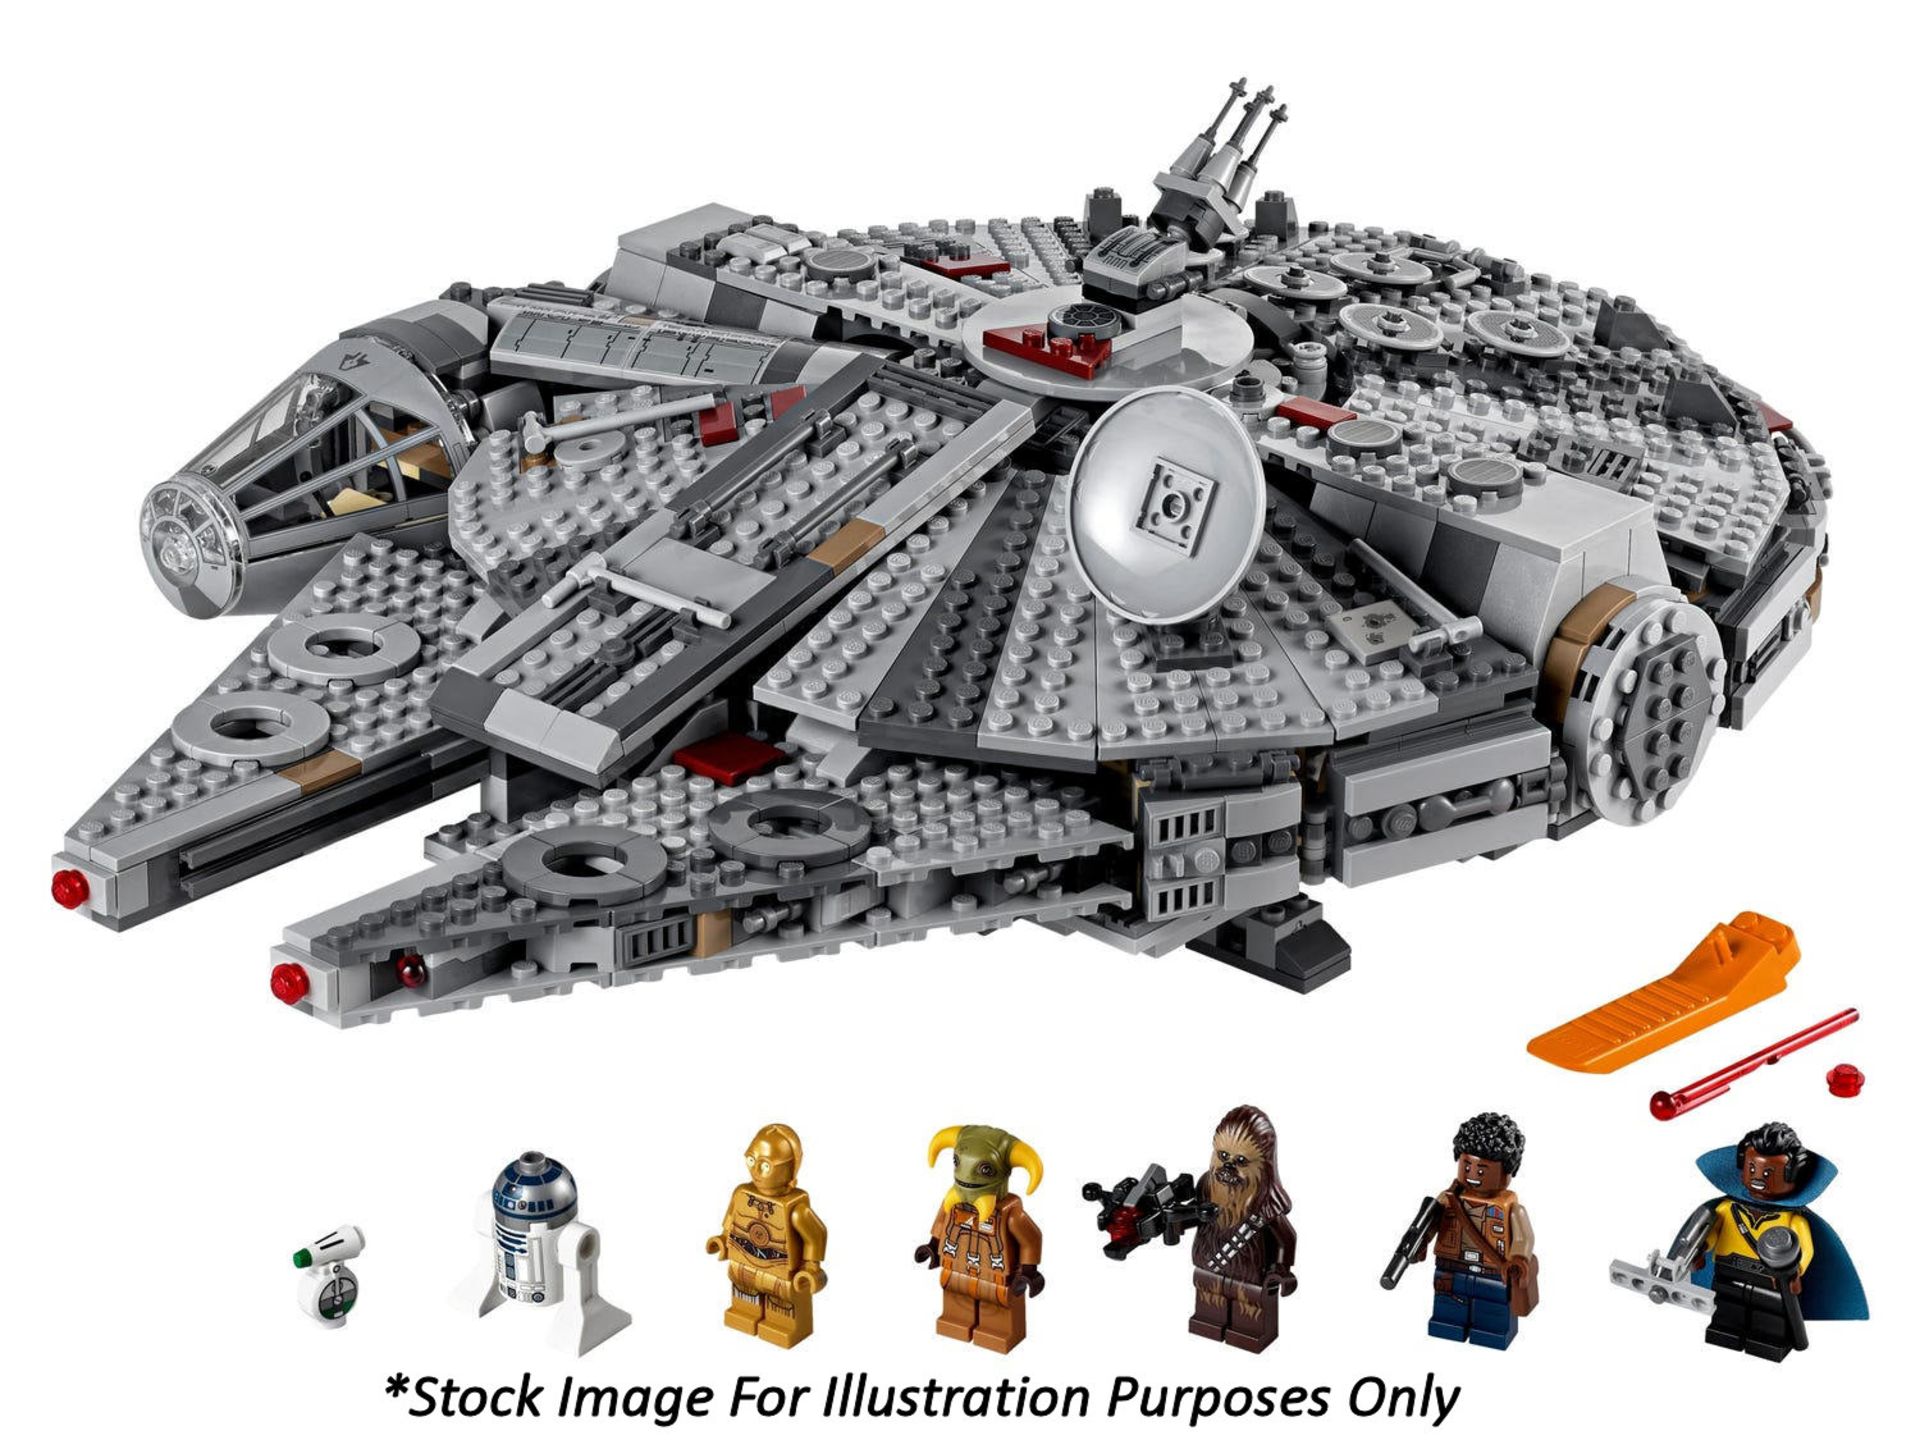 1 x Lego Star Wars Millenium Falcon - Model 75257 - New/Boxed